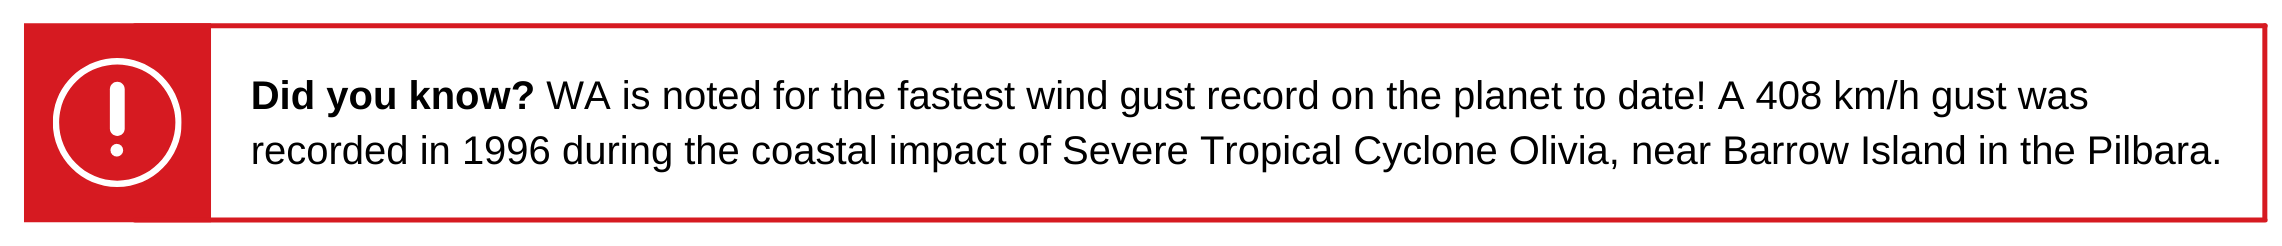 Fact on fastest wind gust in Australia